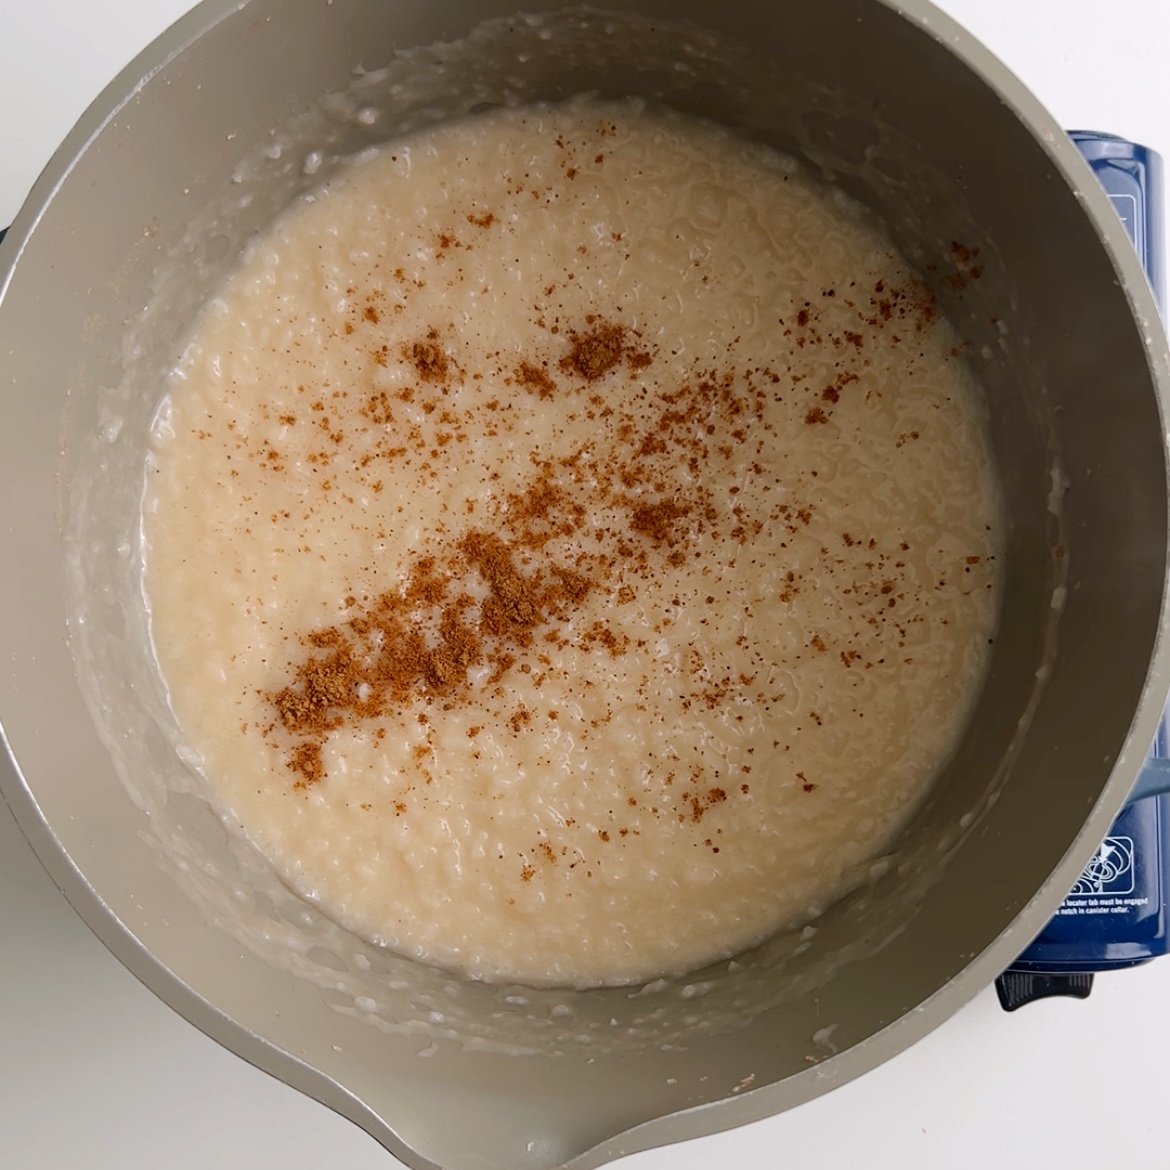 rice porridge with a sprinkle of nut meg